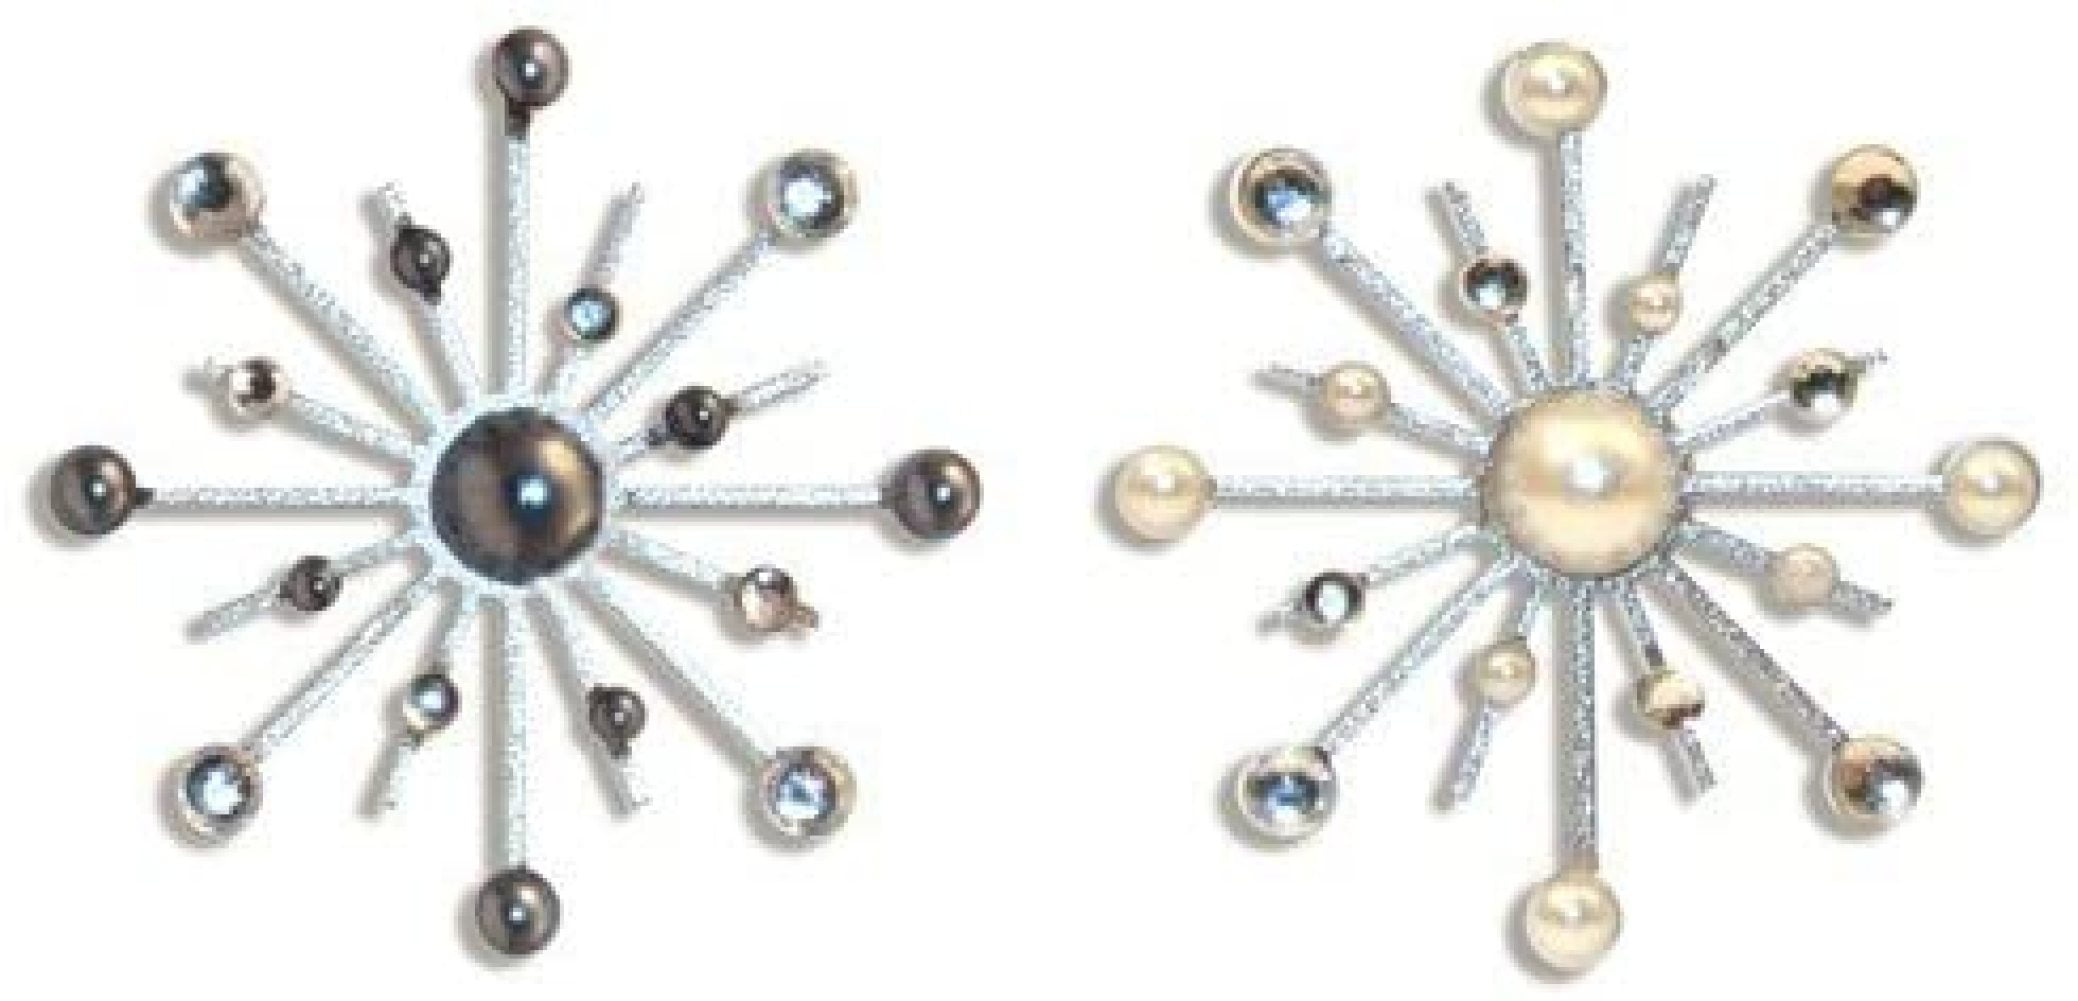 Karen Foster Design Sparkle Burst Brads Embellishments Pearls 6 White and Black